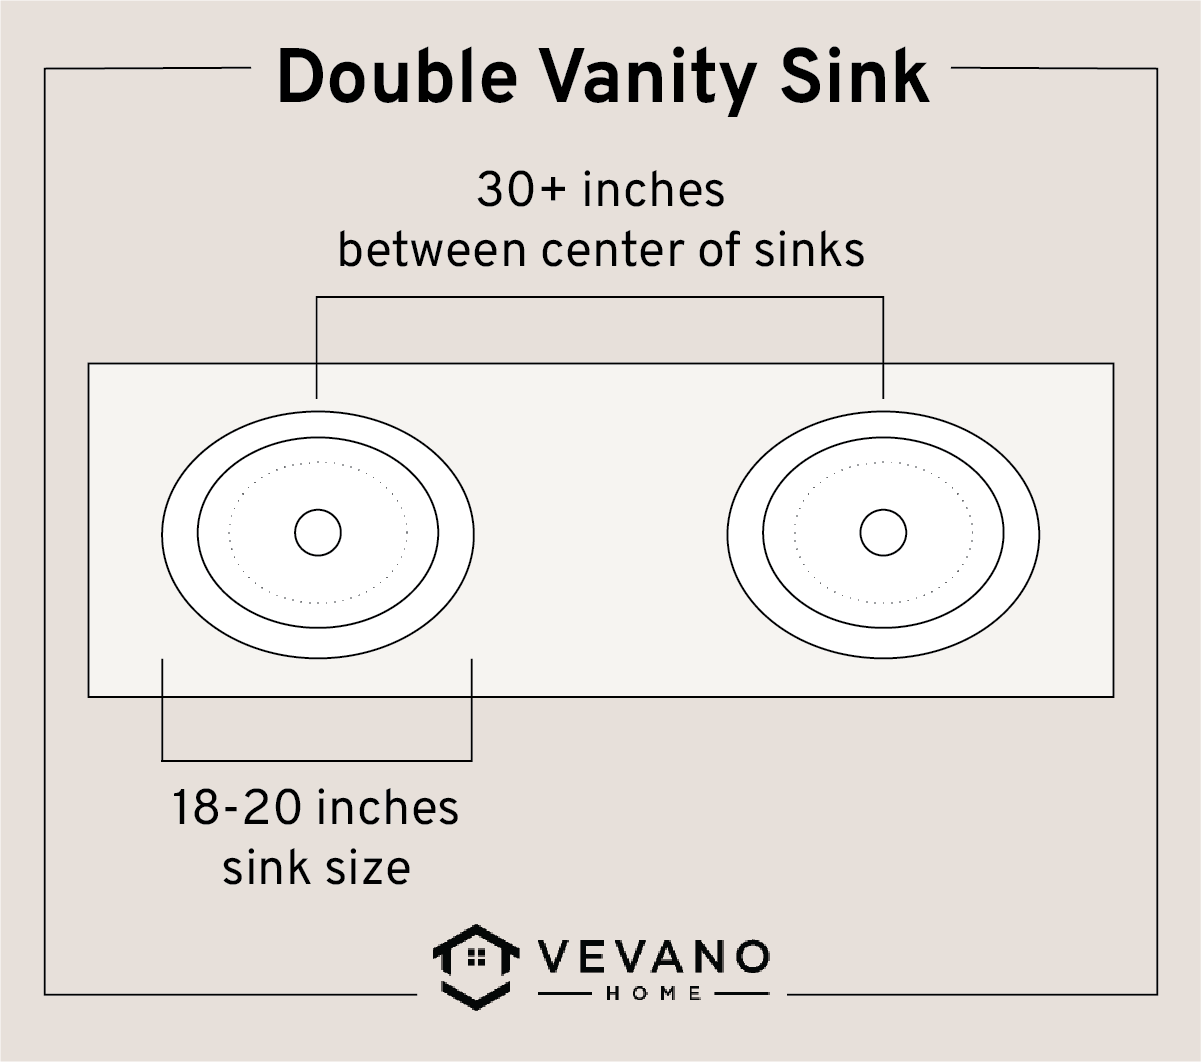 double vanity sink measurement guide